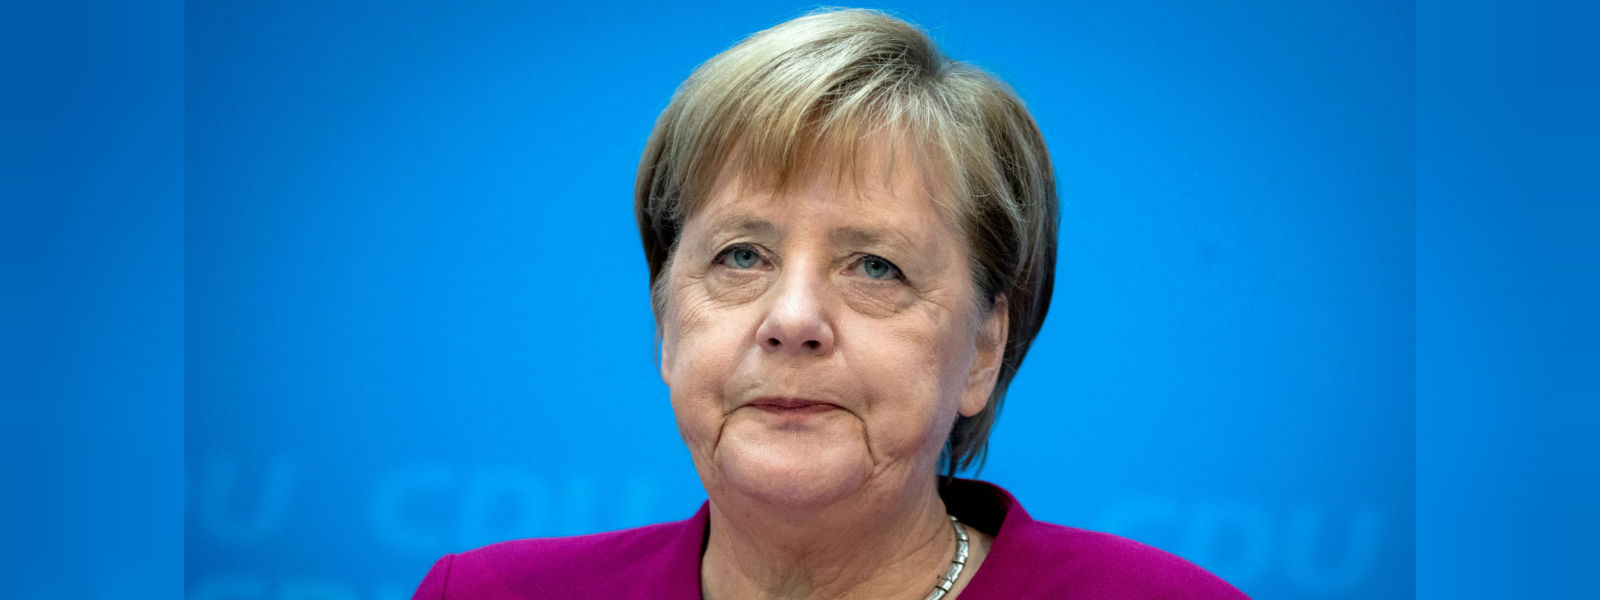 German Chancellor Angela Merkel hacked